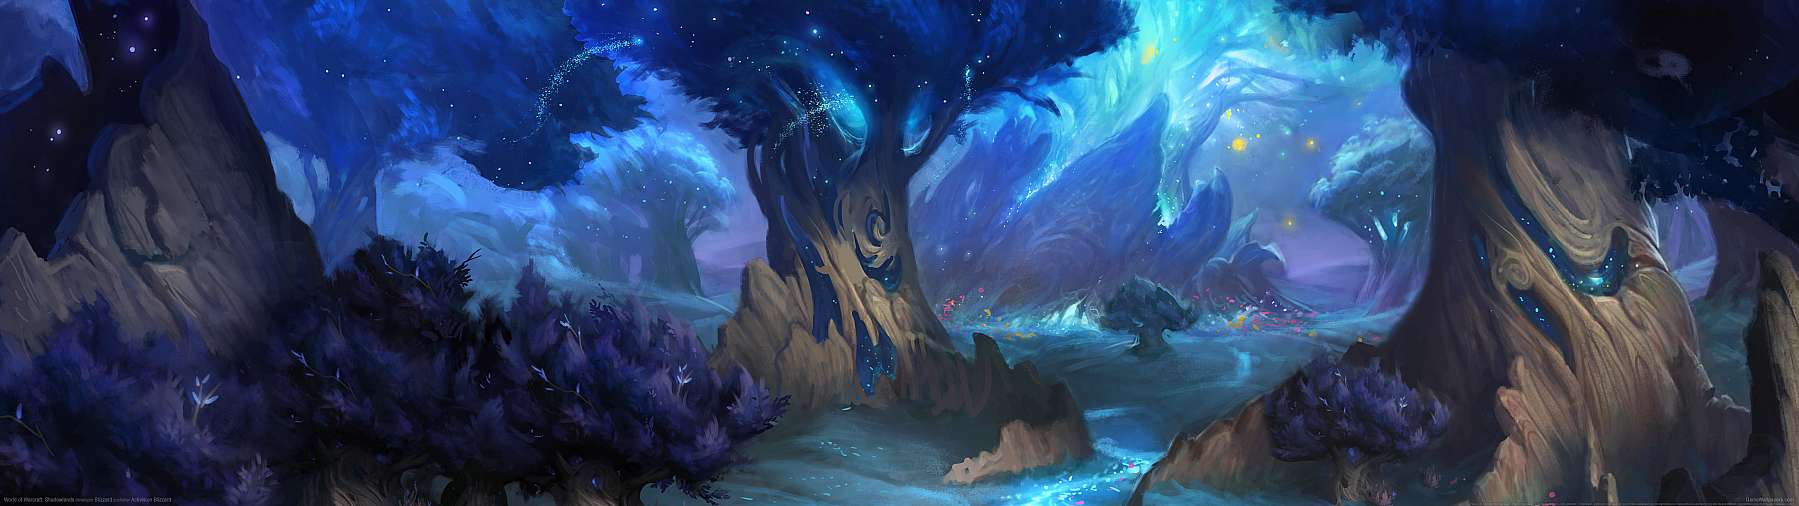 World of Warcraft: Shadowlands superwide wallpaper or background 05